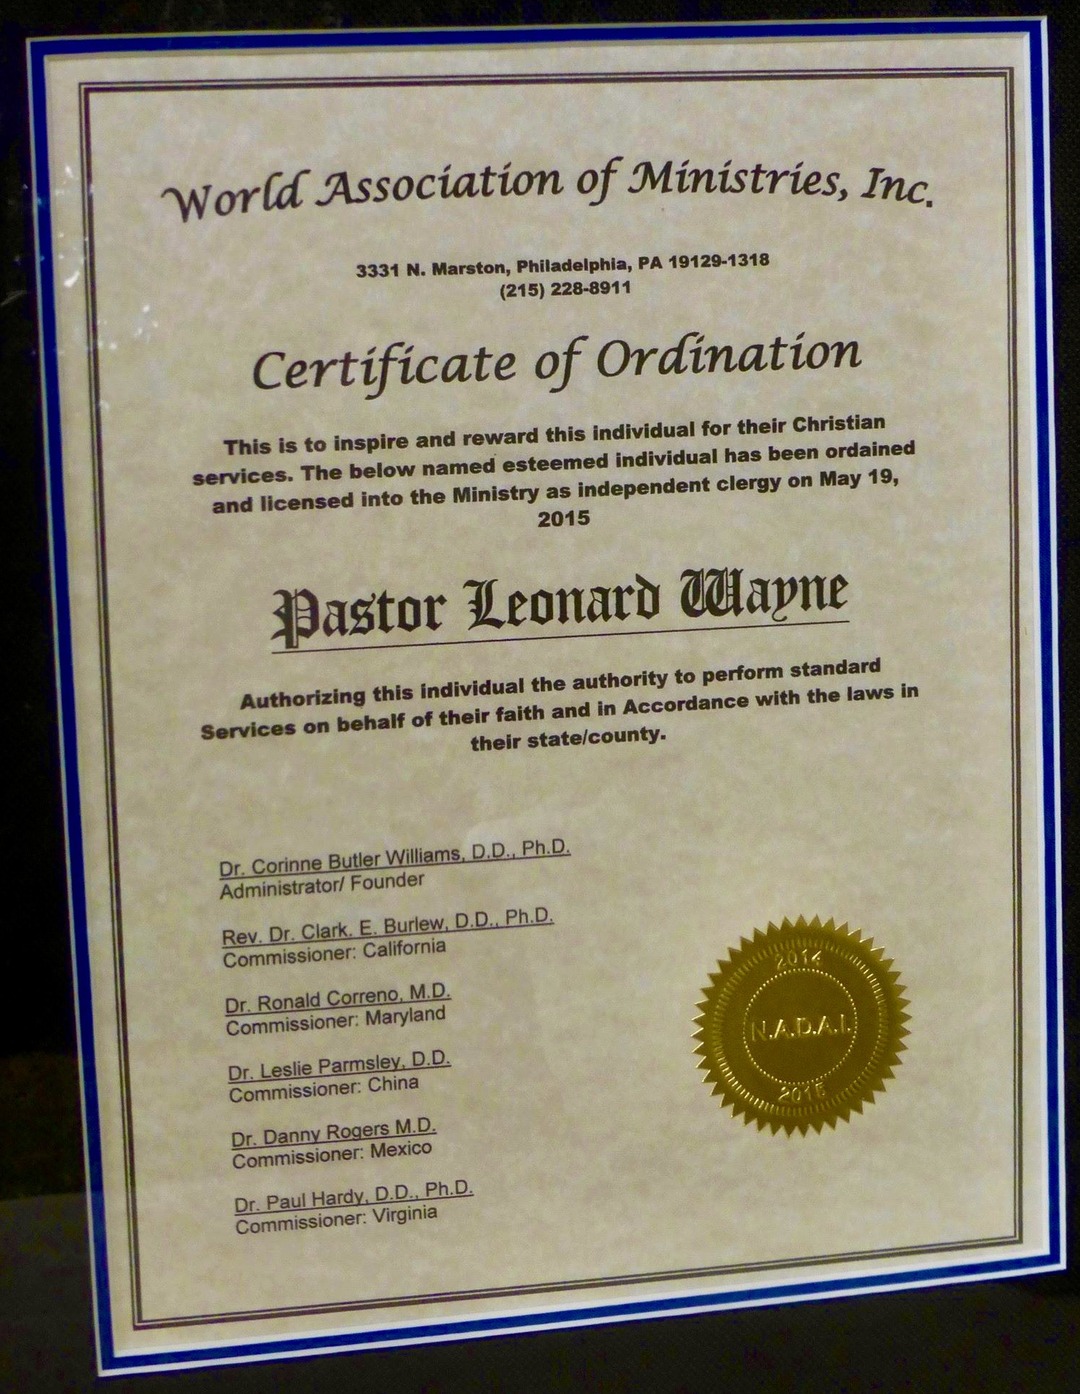 Leonard Wayne certificate 1